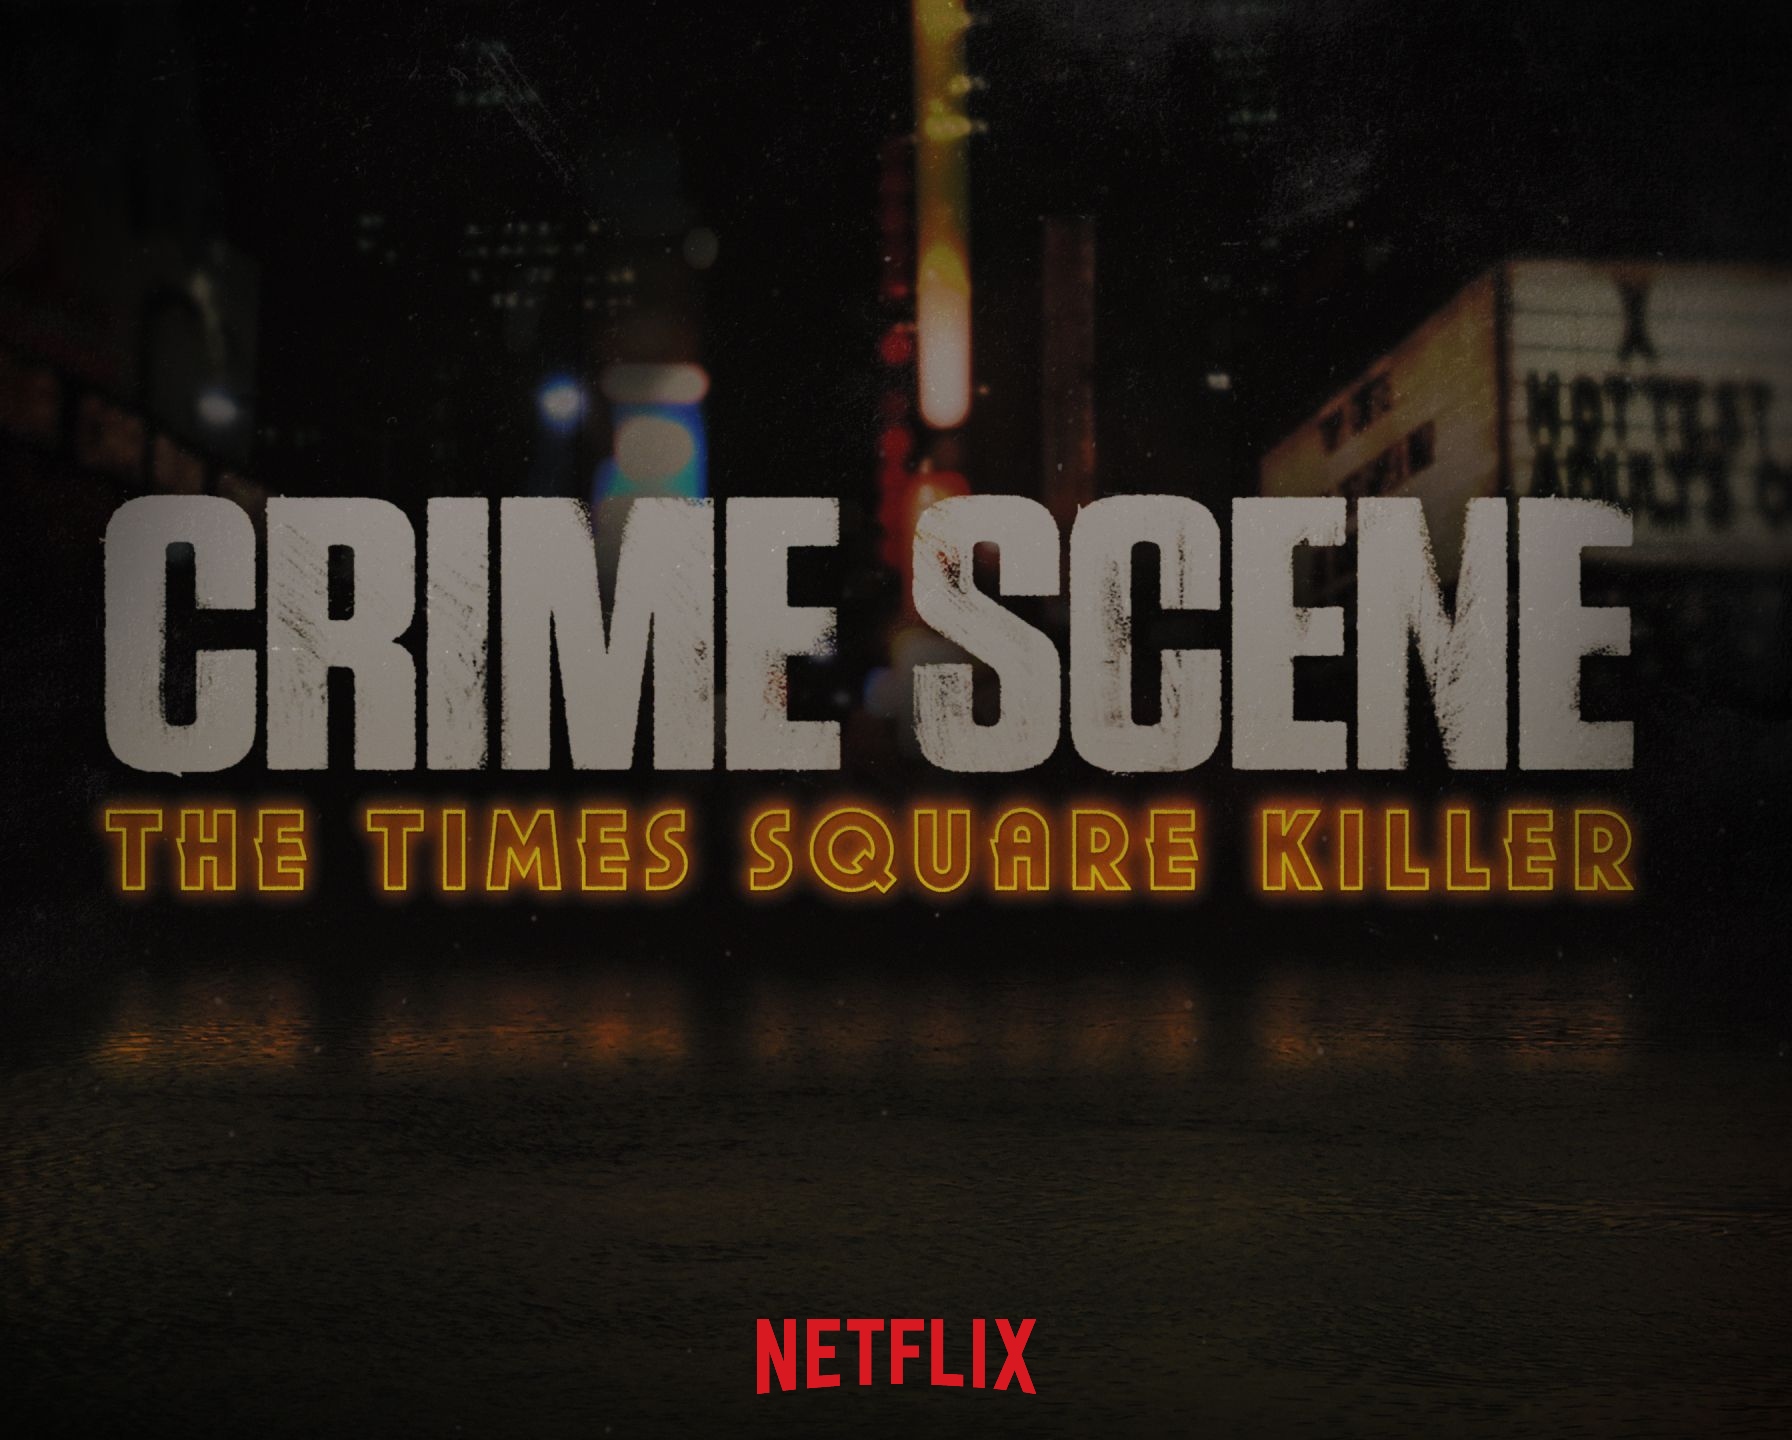 Is Crime Scene The Times Square Killer on Netflix